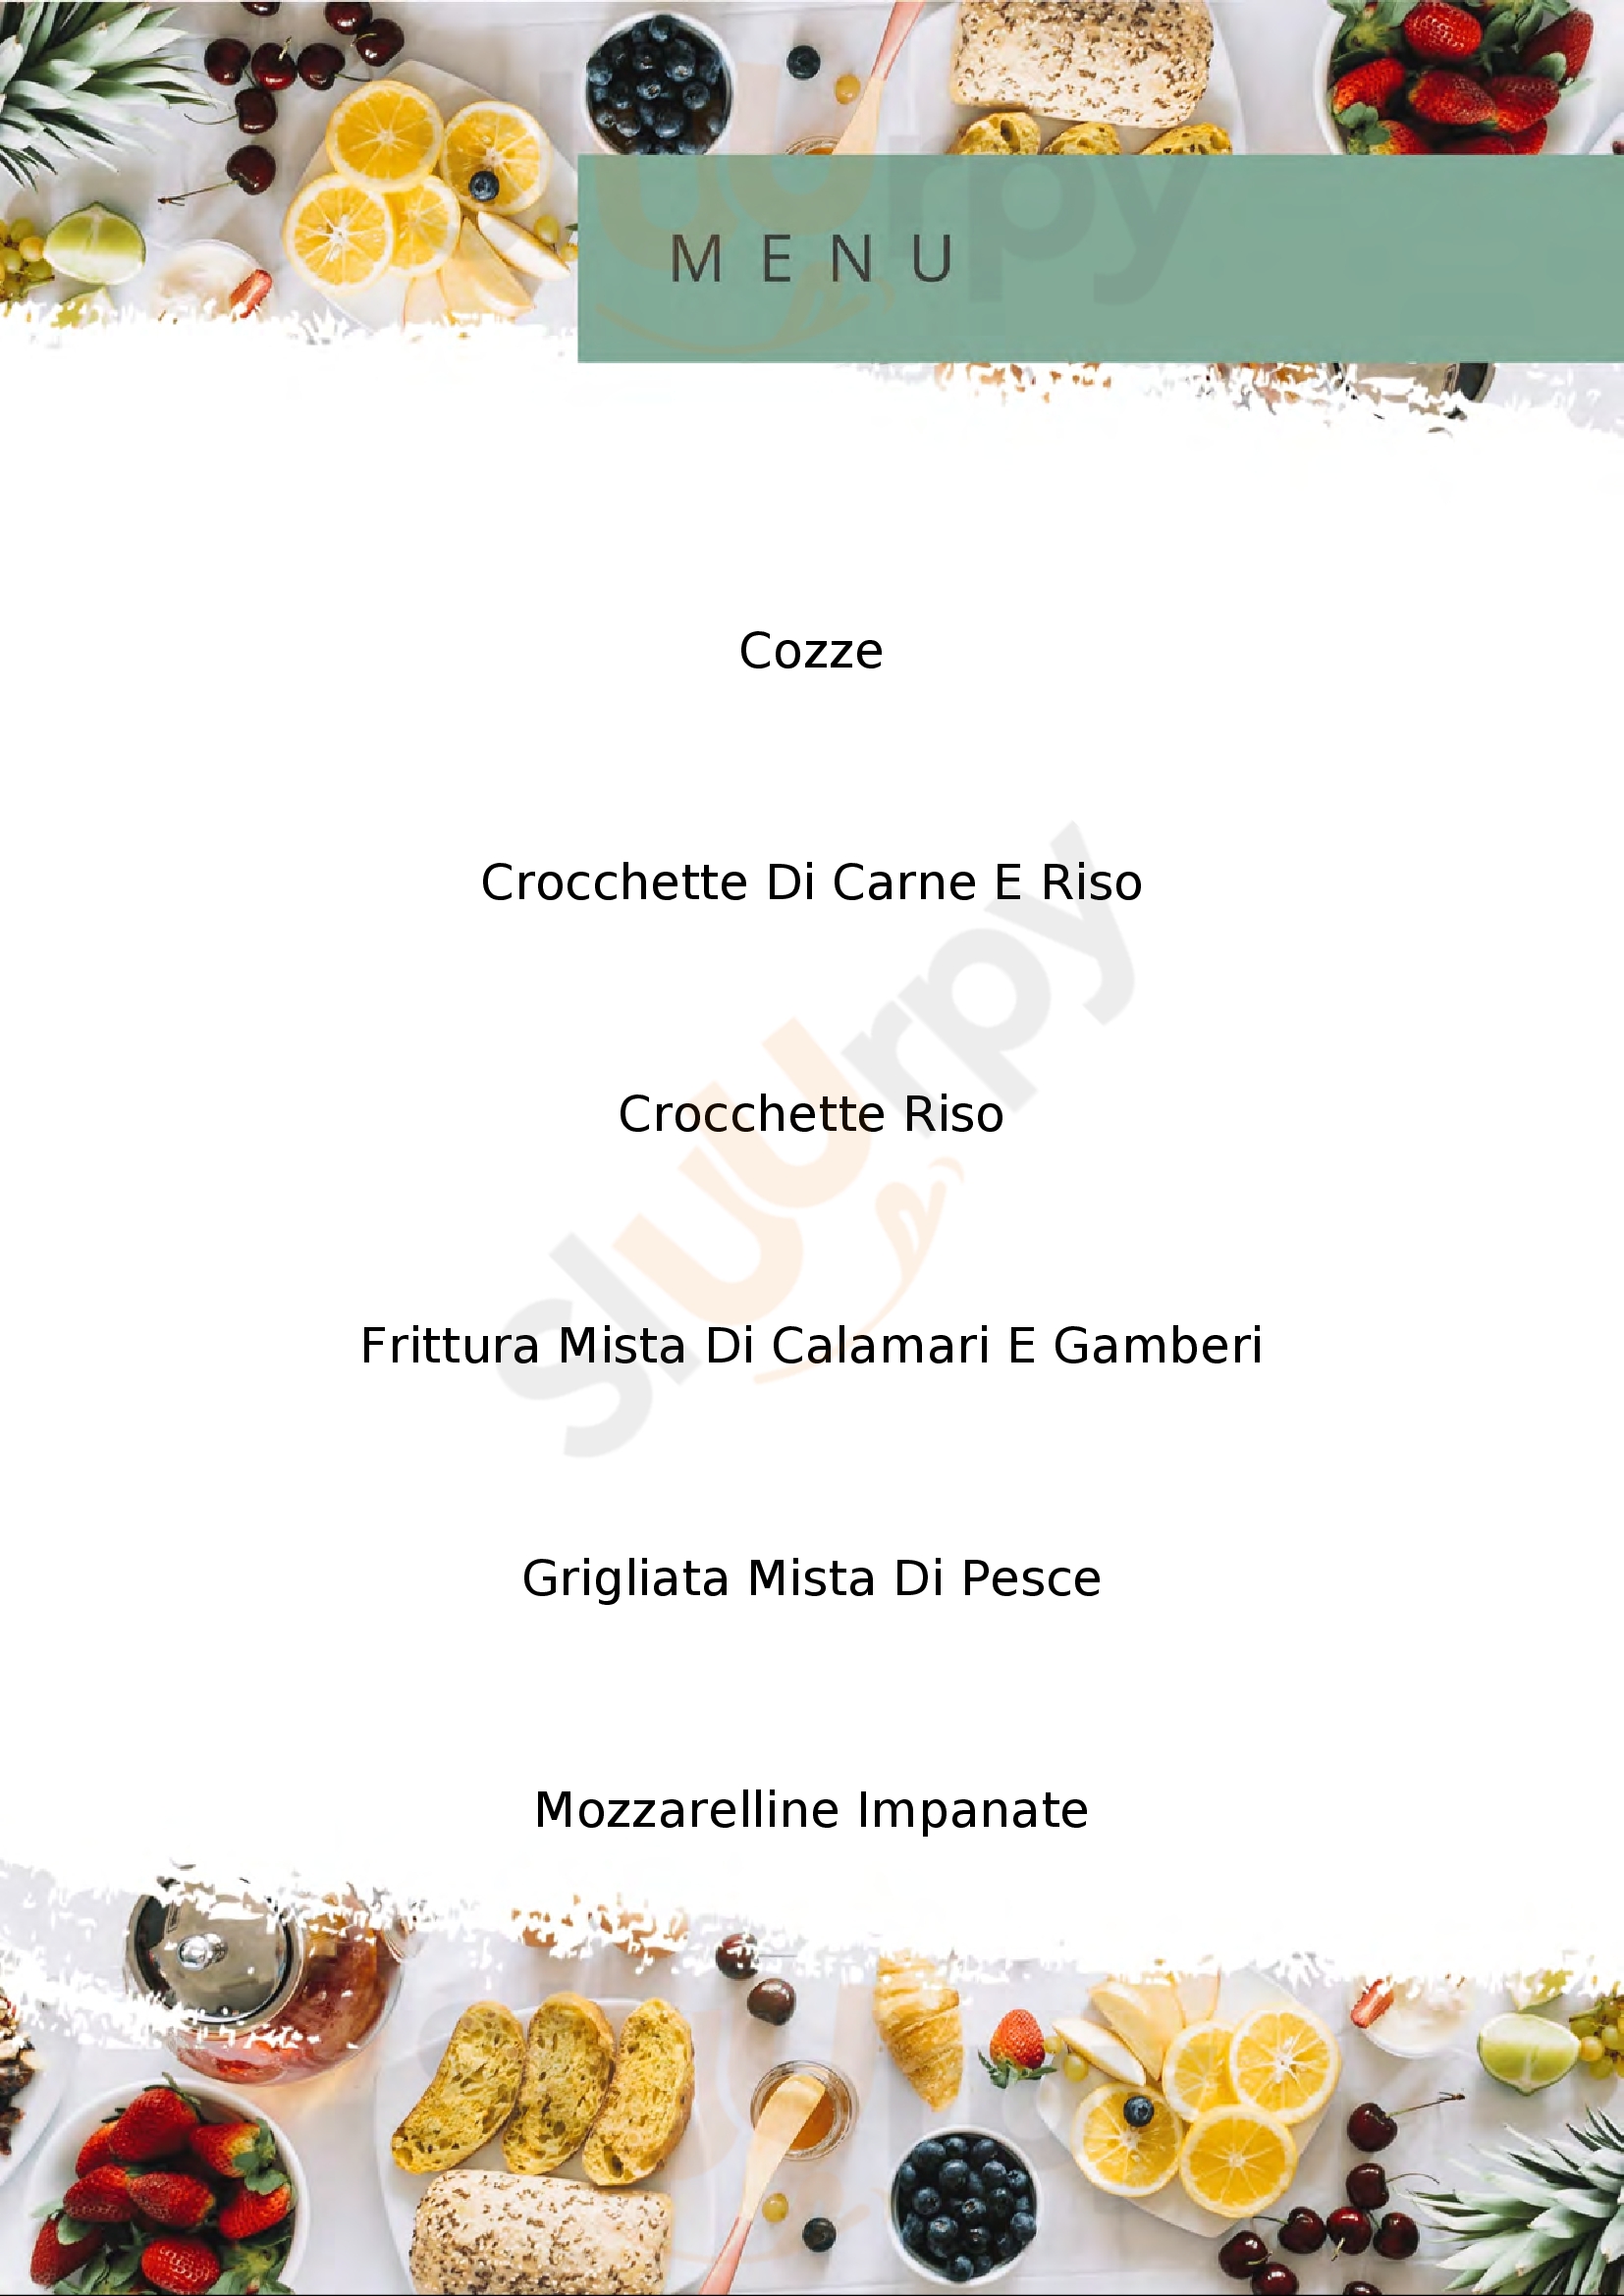 Ristorante Pizzeria San Luca Amaroni menù 1 pagina